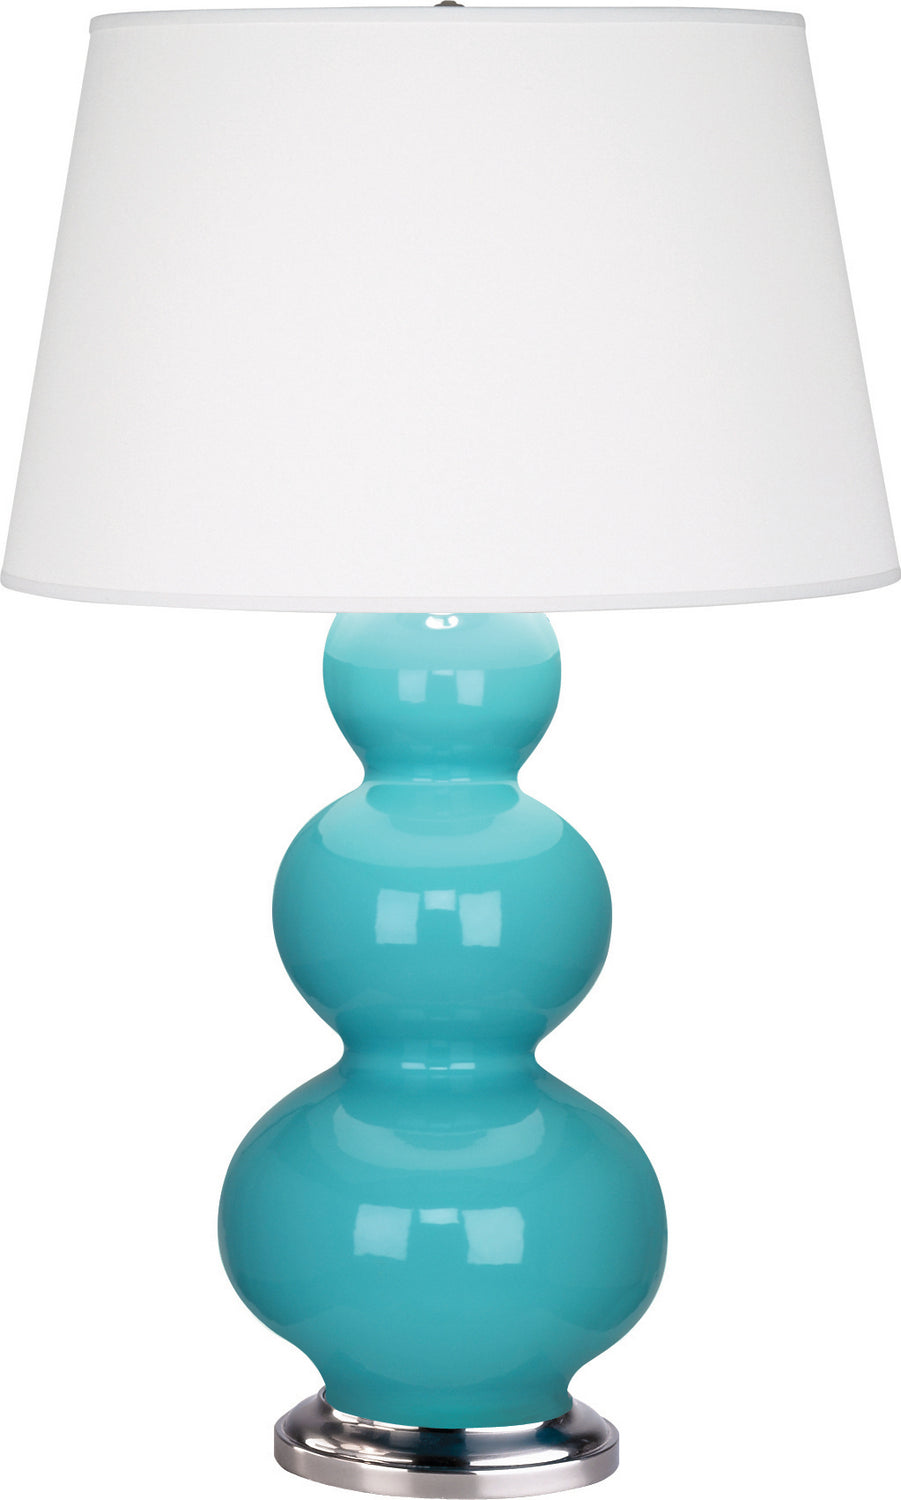 Robert Abbey - One Light Table Lamp - Triple Gourd - Egg Blue Glazed Ceramic w/Antique Silver- Union Lighting Luminaires Decor